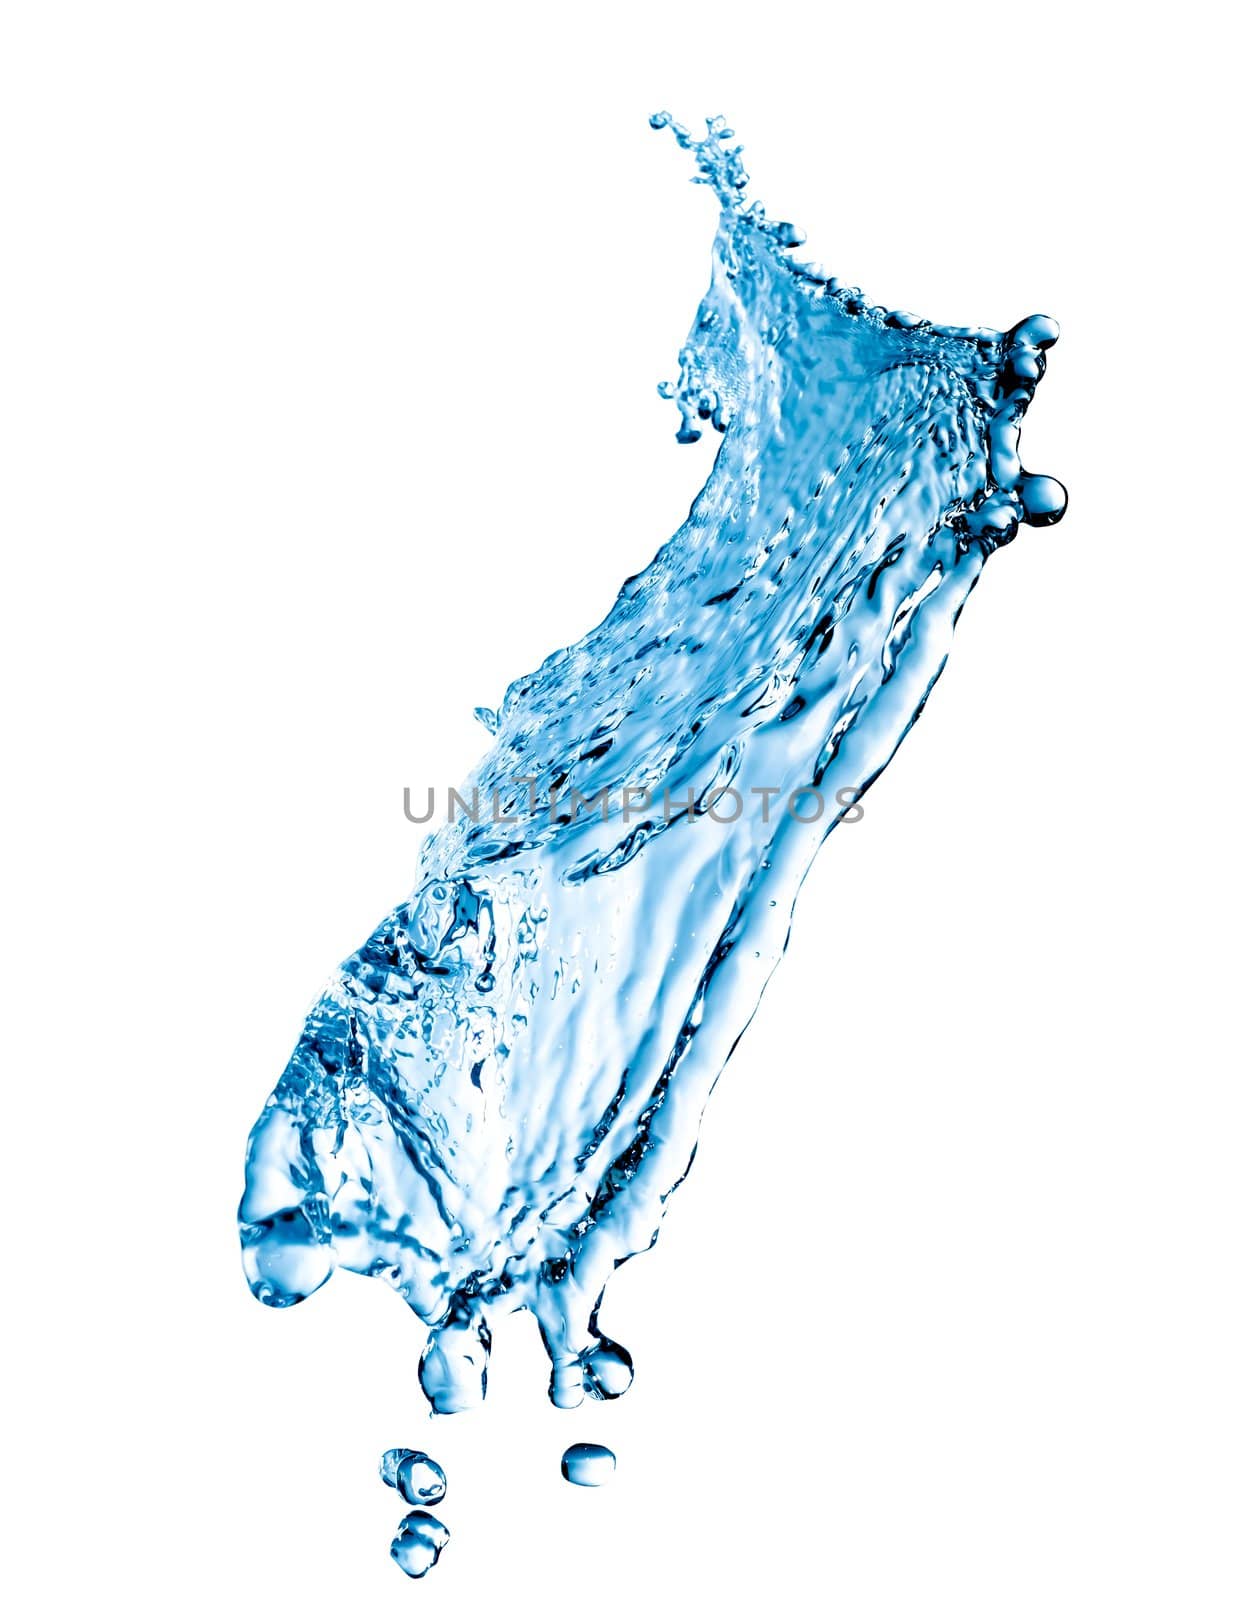 blue splash close up shoot isolated on a white background